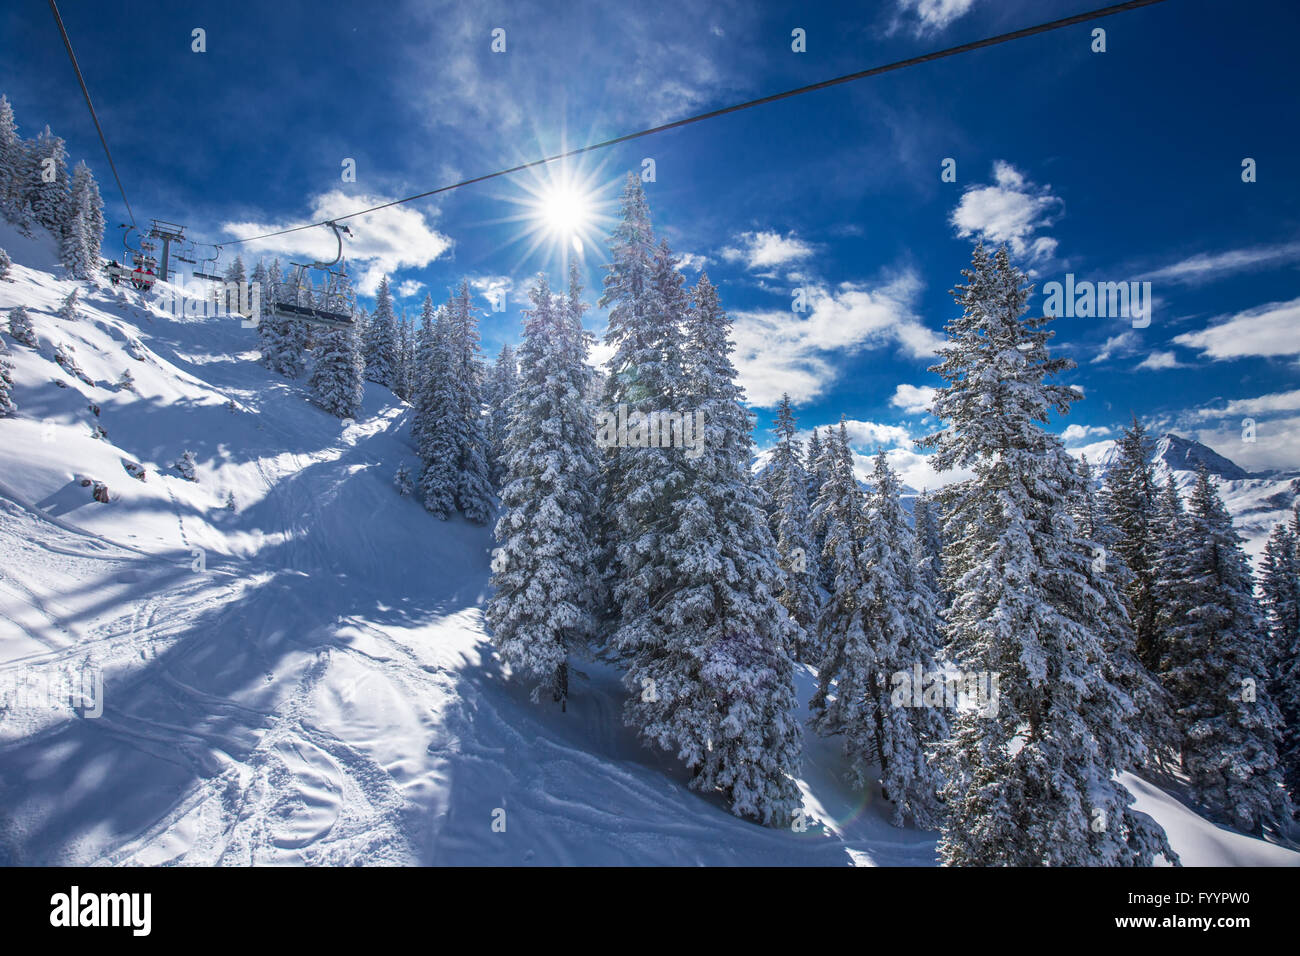 KITZBUEHEL, AUSTRIA, February 17, 2016 - Skiers on ski lift enjoying the view to foggy Alps in Austria and beautiful snowy count Stock Photo